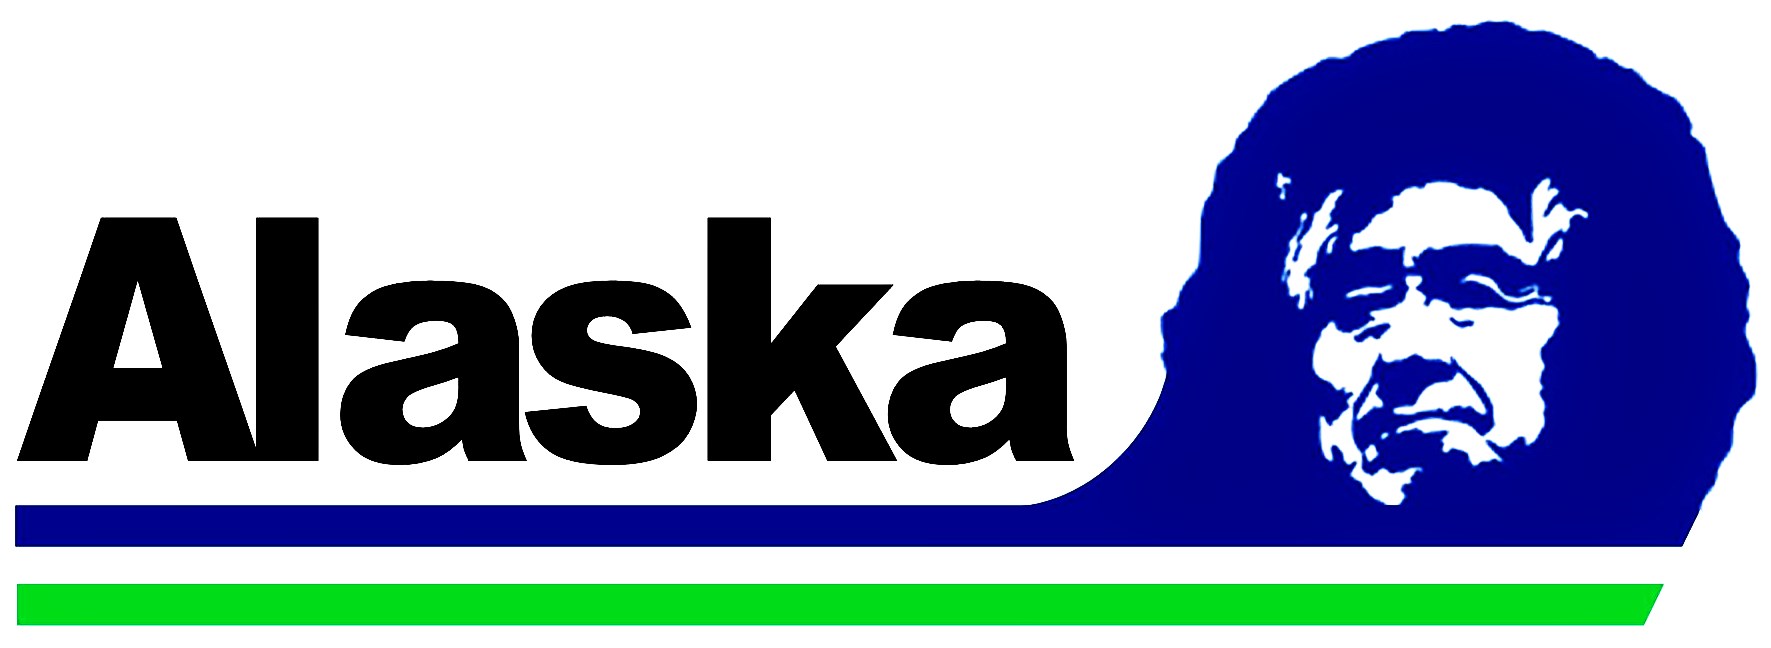 Alaska Airlines
